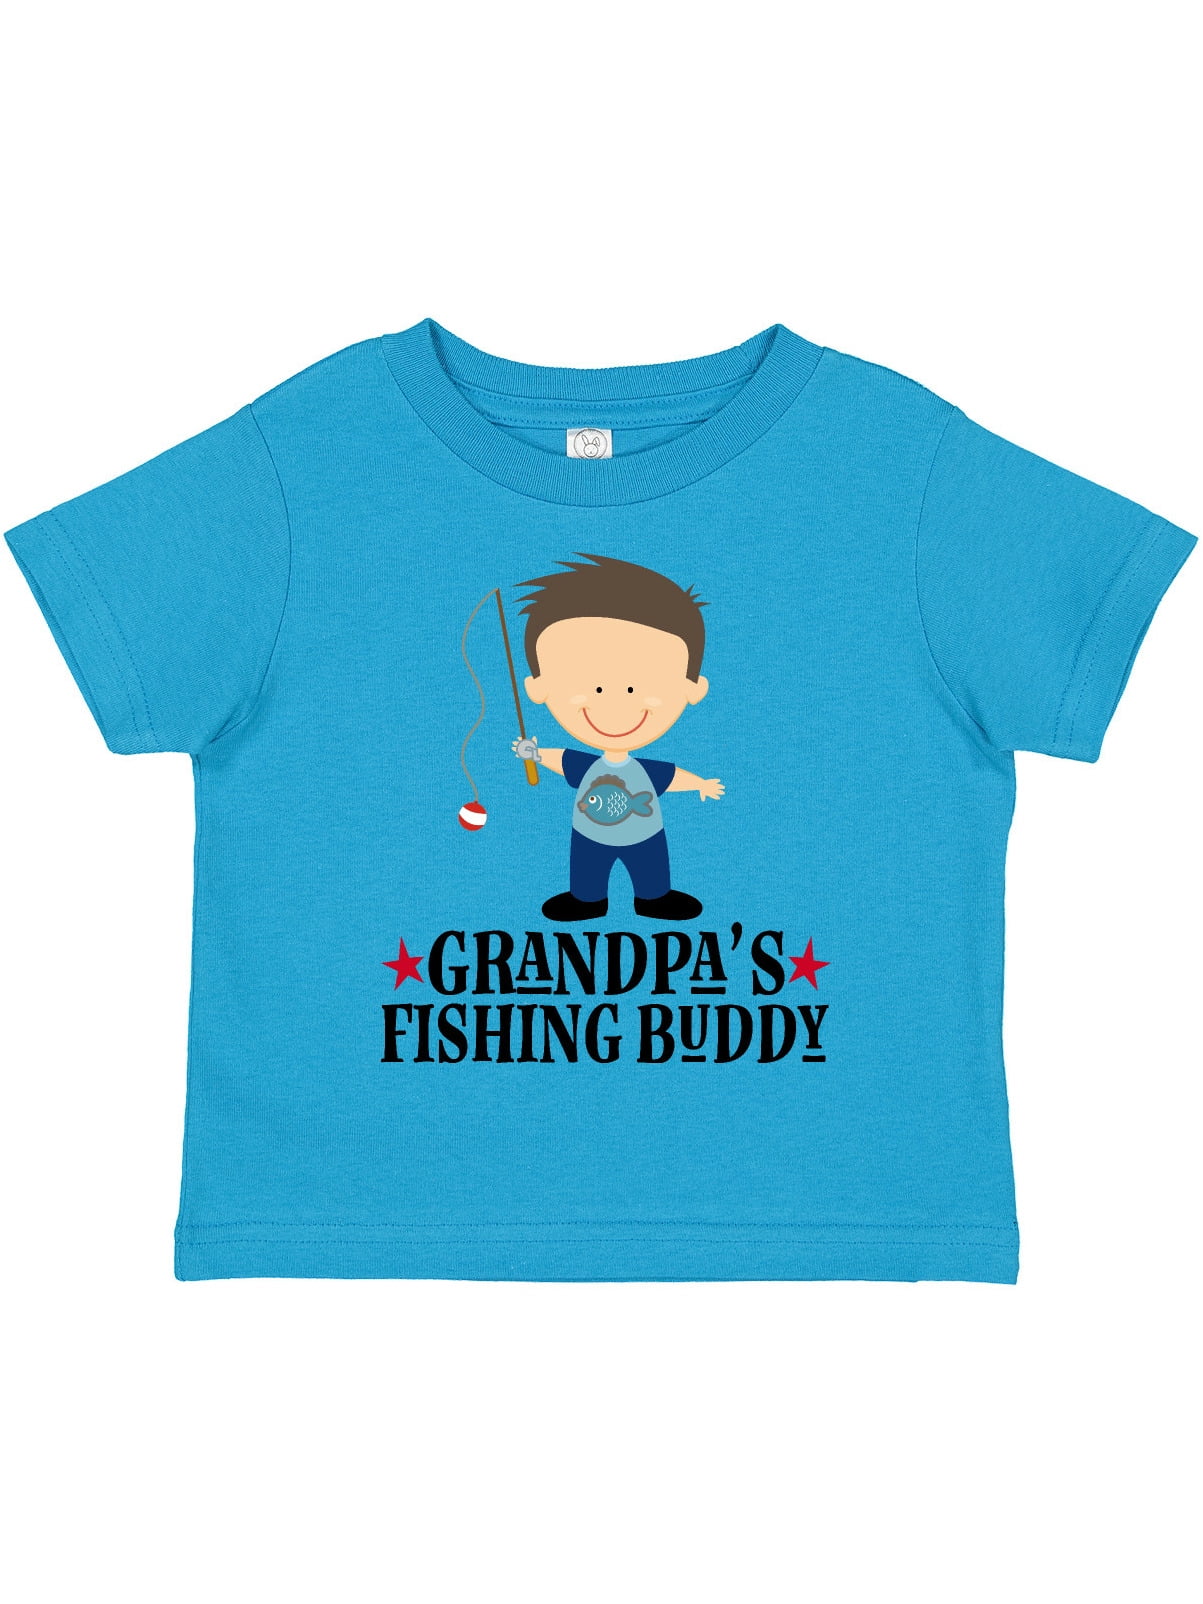 Baby Fishing Shirts